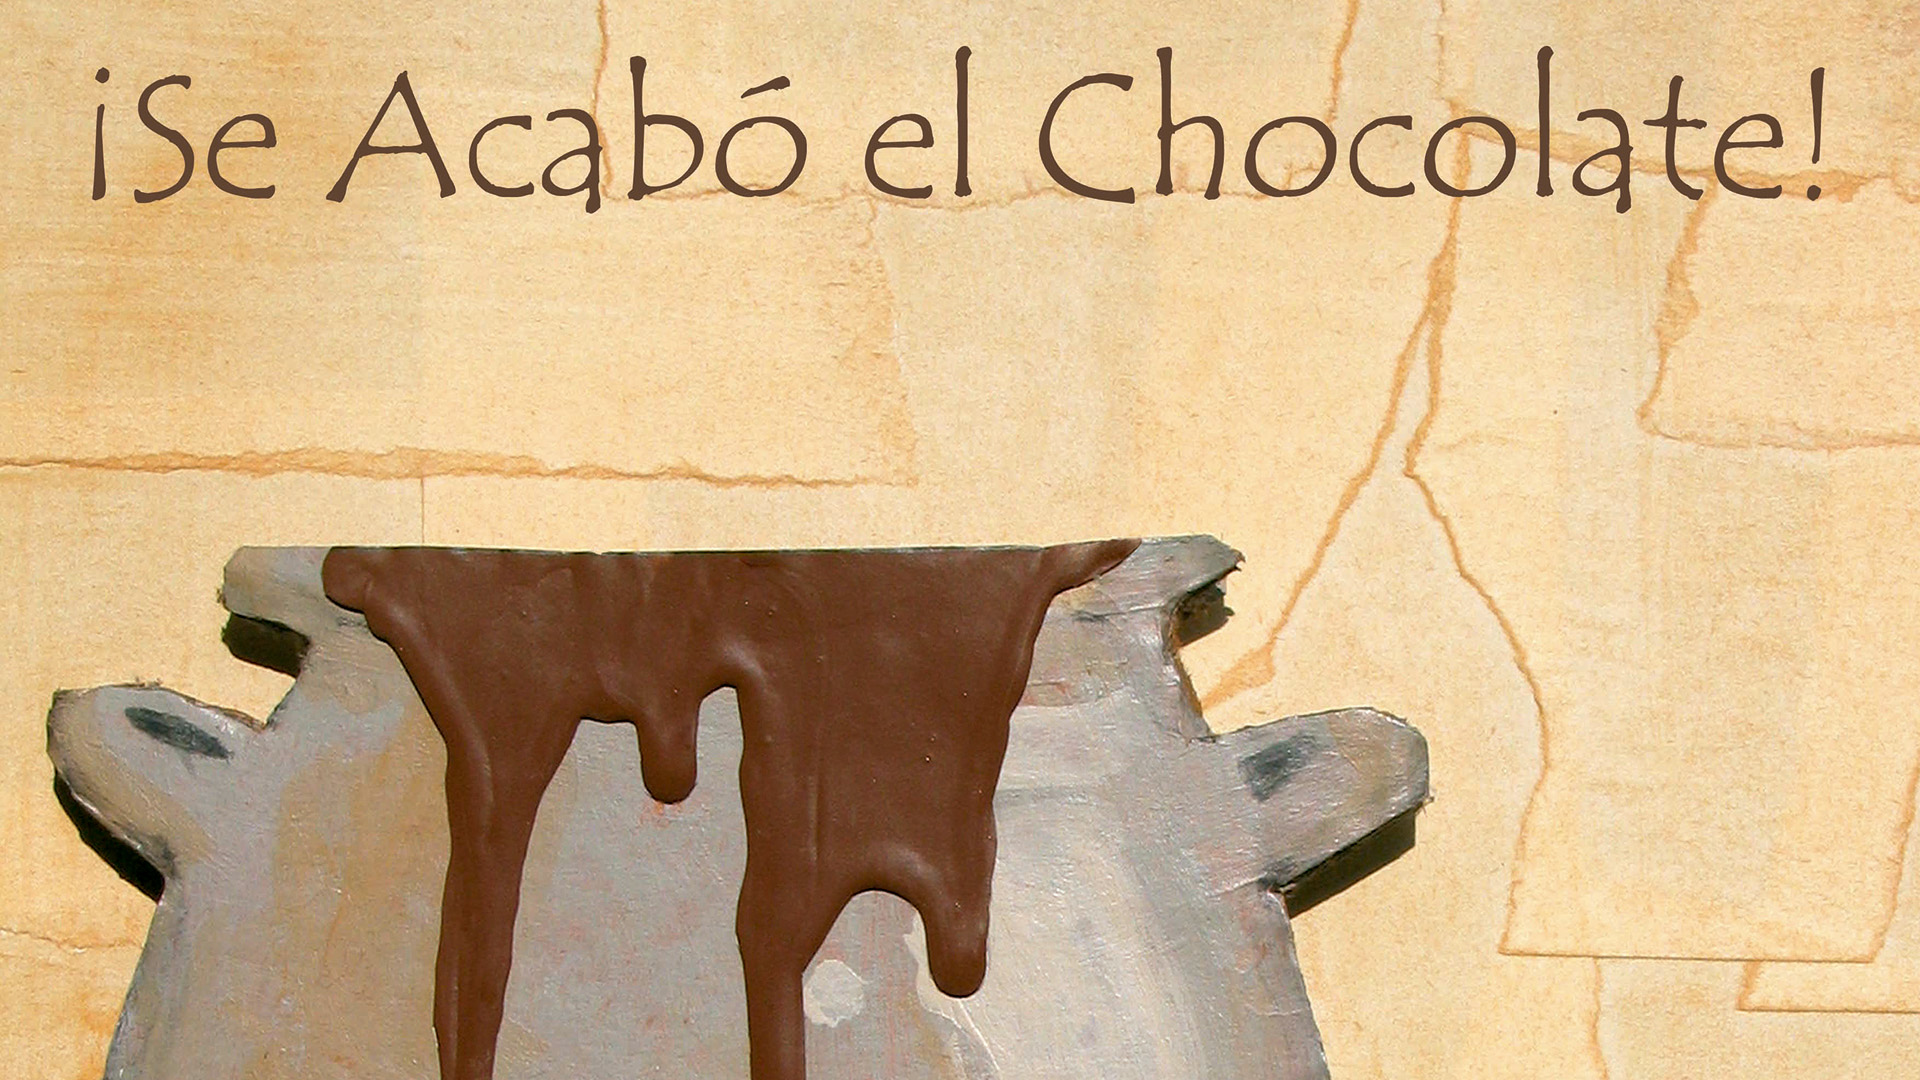 Espectaculo-SE-ACABO-EL-CHOCOLATE-cartel-fullHD